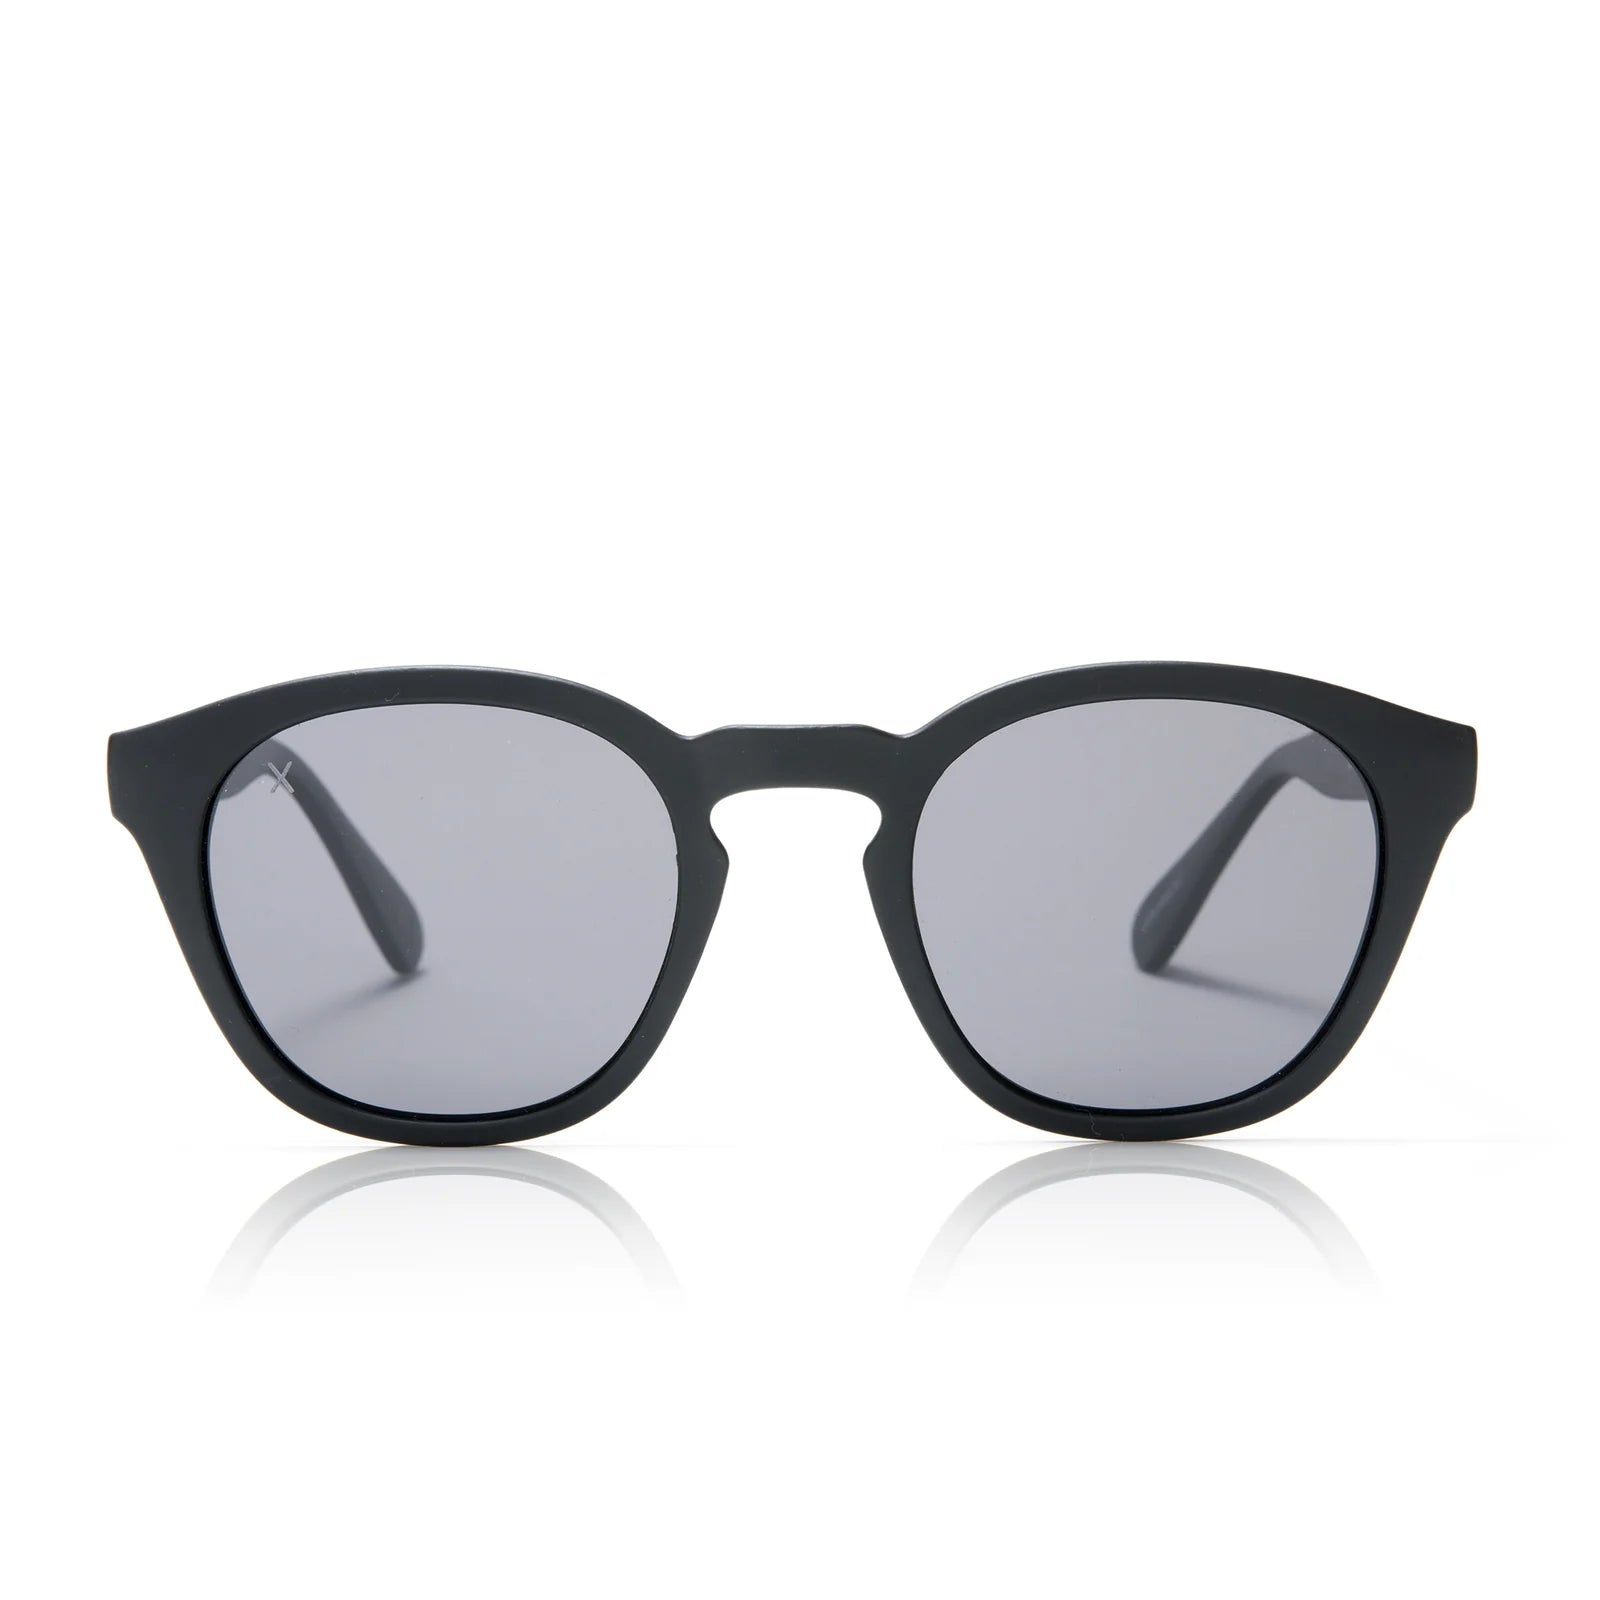 Larchmont polarized sunglasses